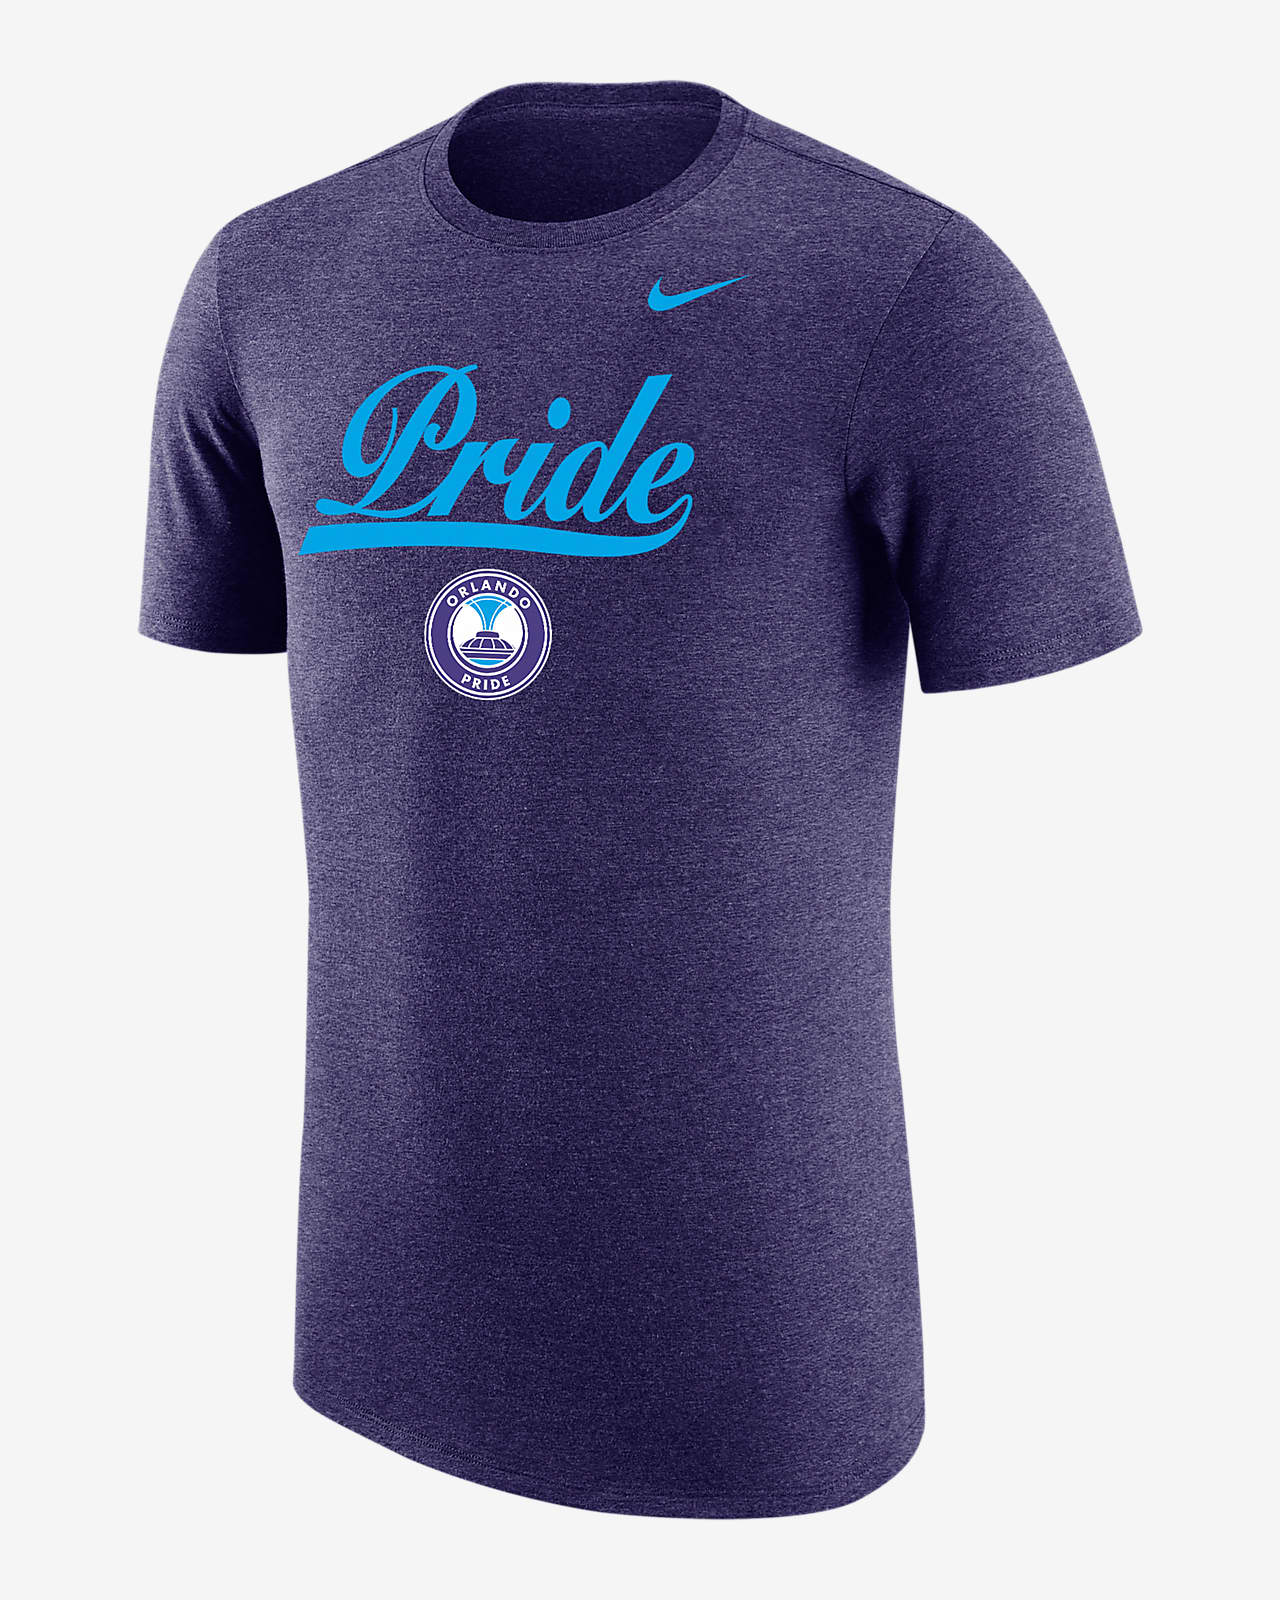 Orlando Pride Men's Nike Soccer T-Shirt